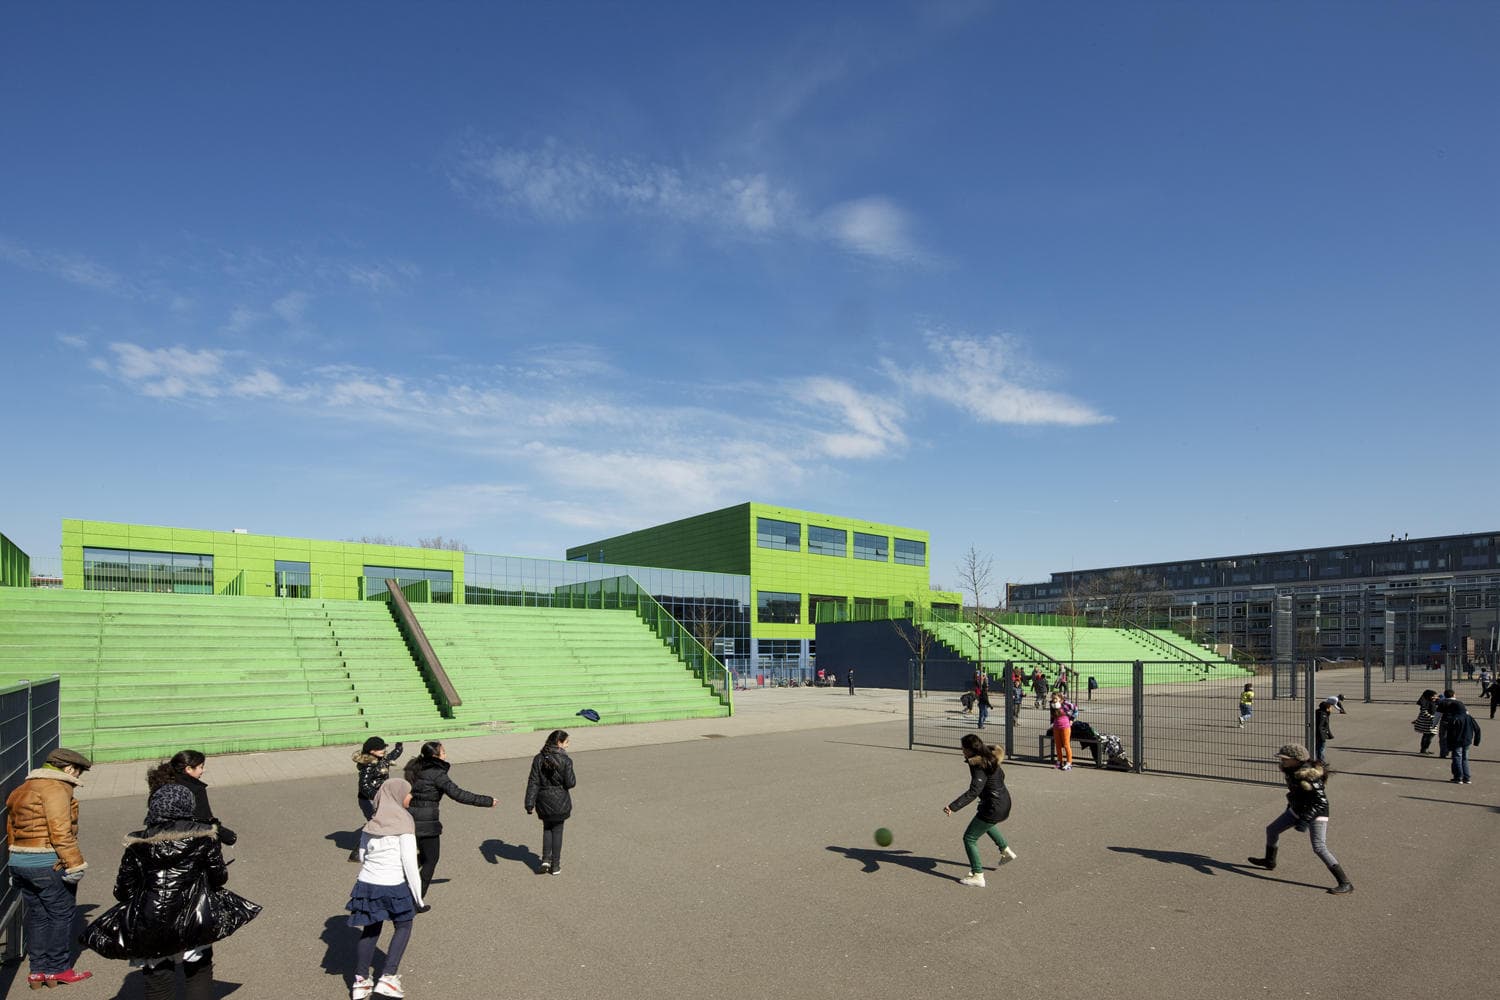 De kikker - Bredere school Osdorp Amsterdam - Liesbeth van der Pol - Dok Architecten | Solarix